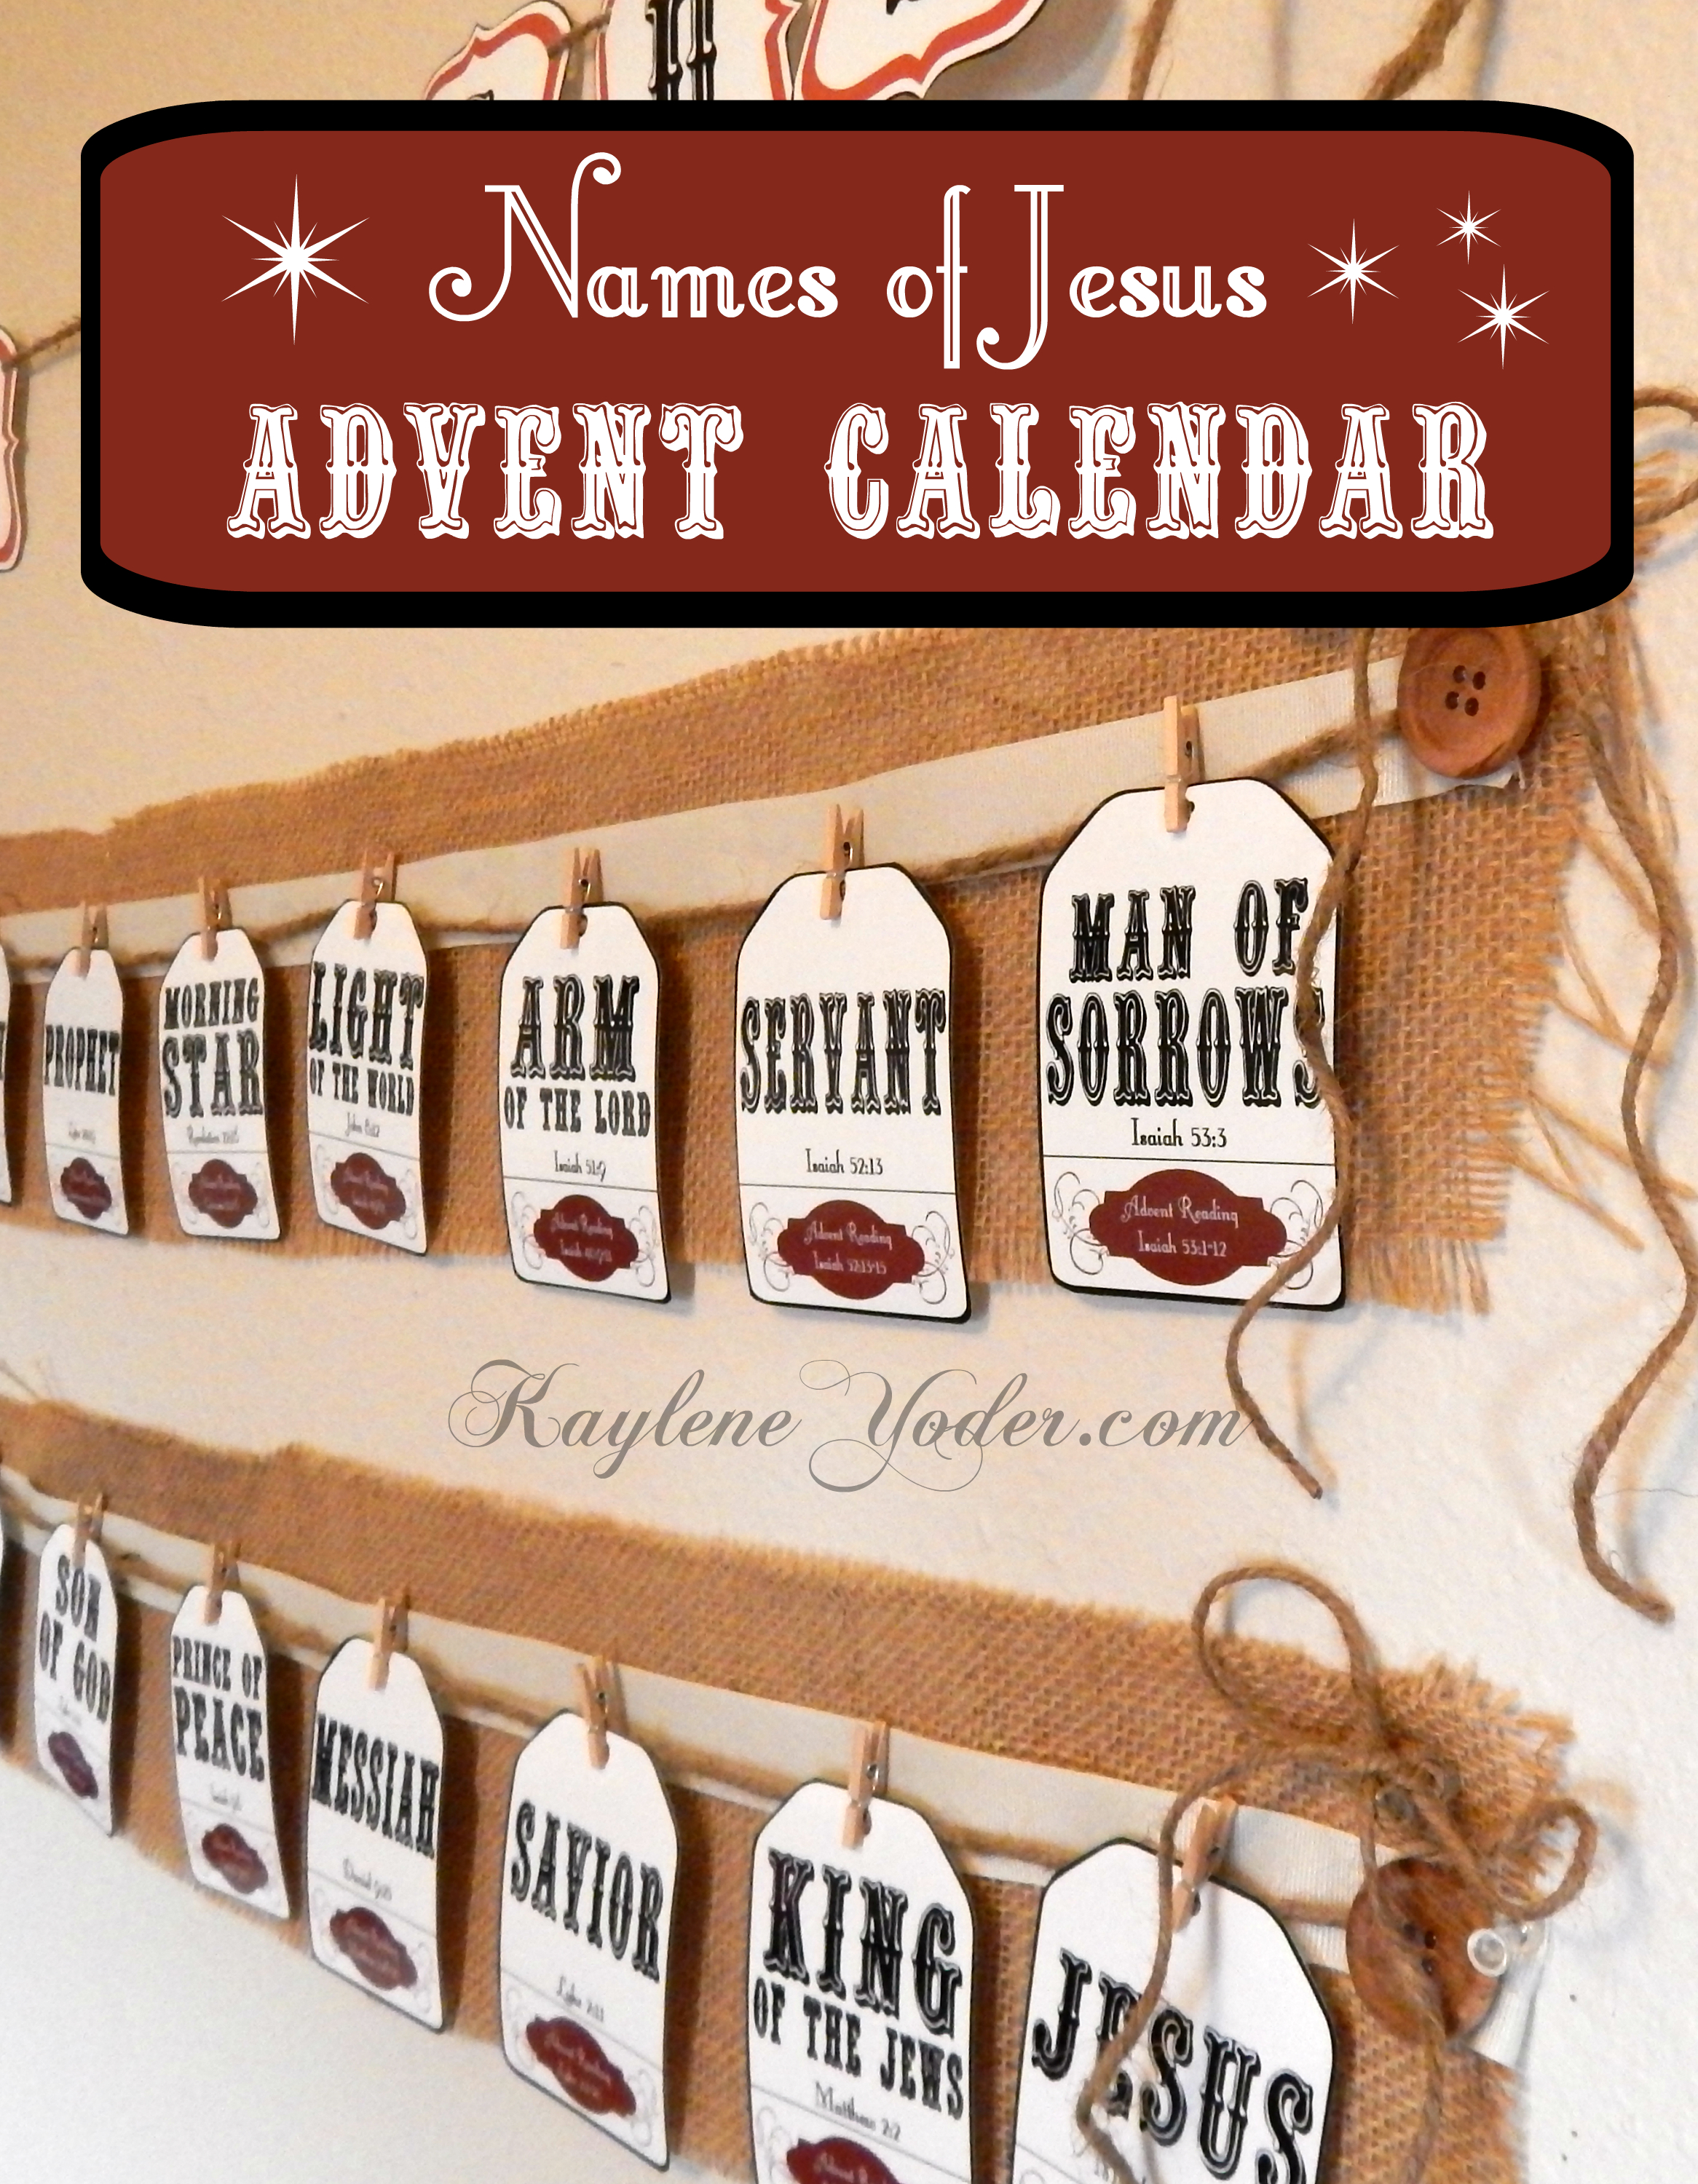 Names of Jesus Advent Calendar and Christmas Pack Kaylene Yoder